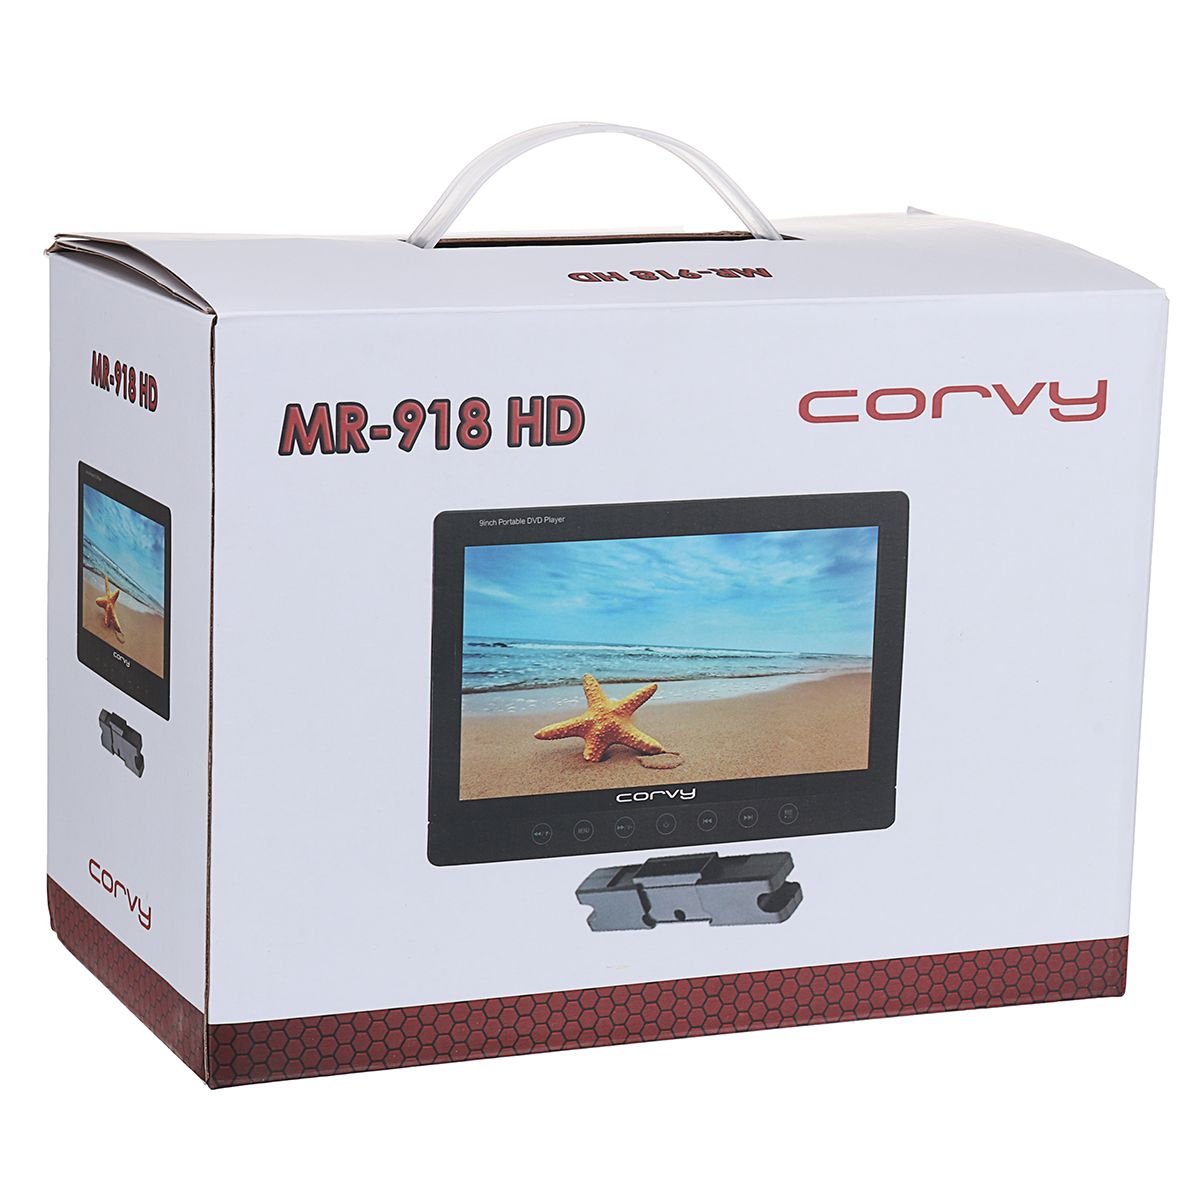 Universal-9-Inch-Digital-TFT-LCD-Car-DVD-Player-Headrest-Monitor-Remote-Control-1381216